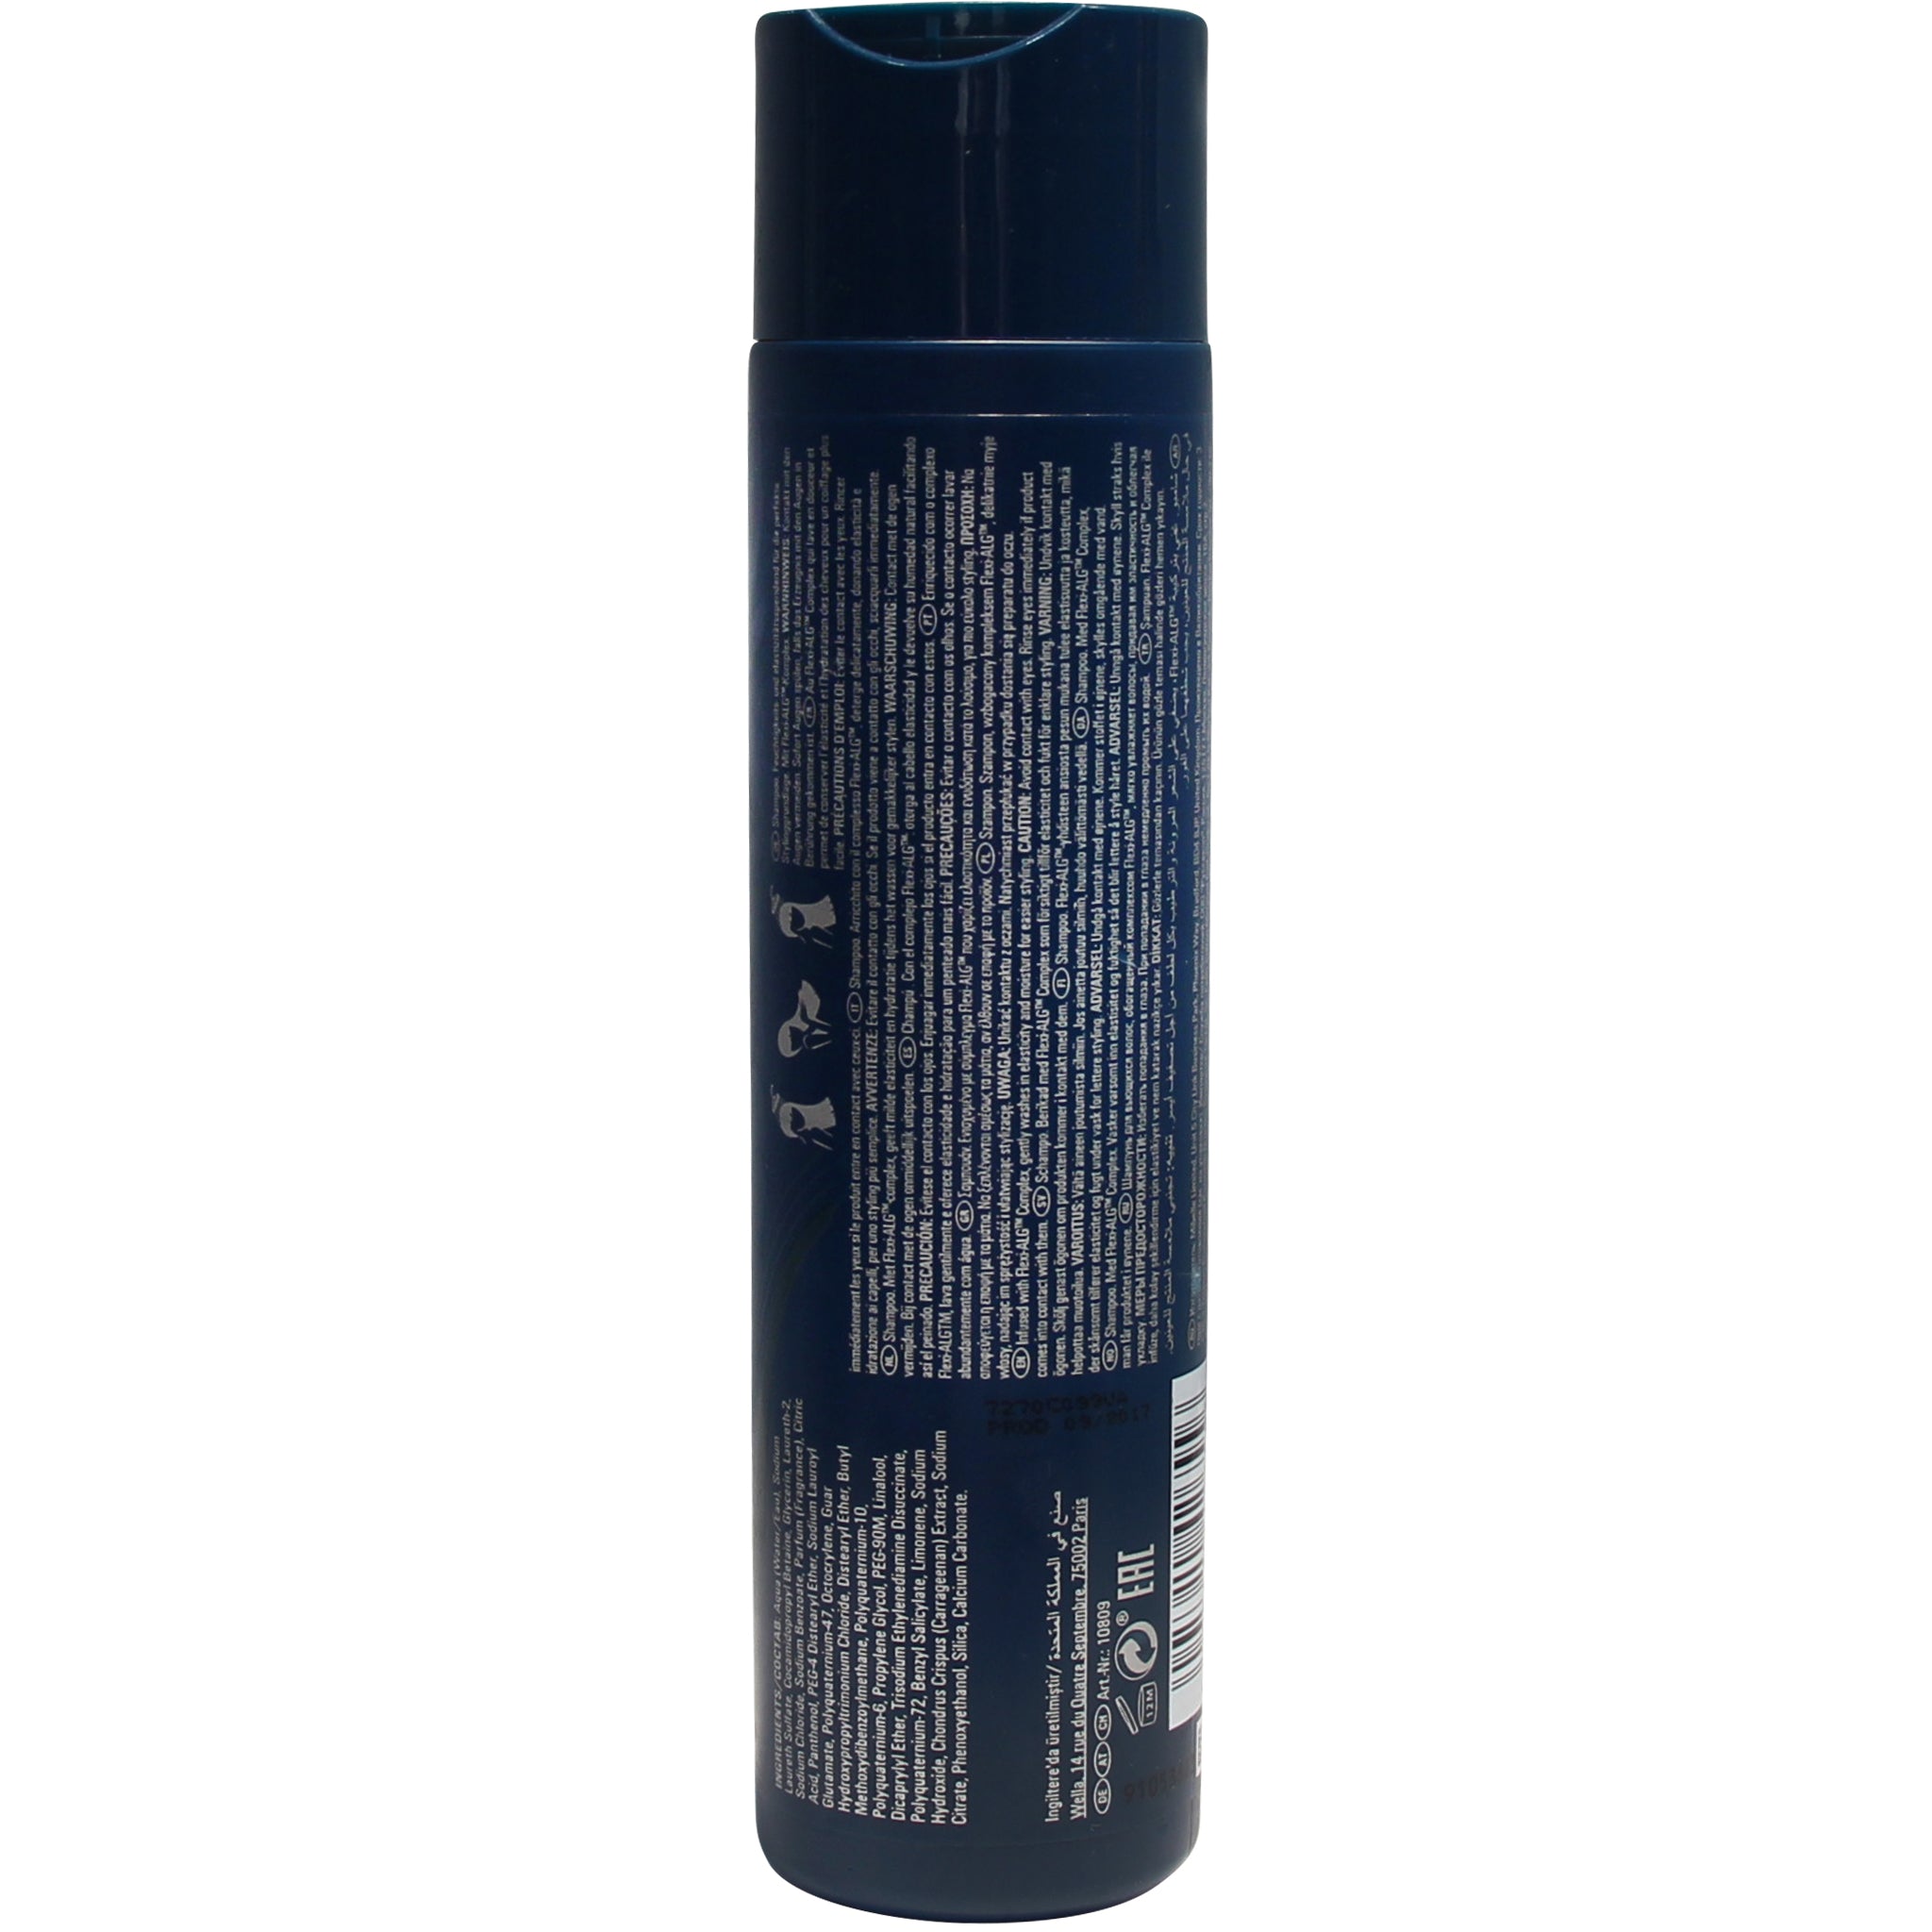 SEB Curl Elastic Cleanser Shampoo 250ml - Champú para cabello rizado y ondulado